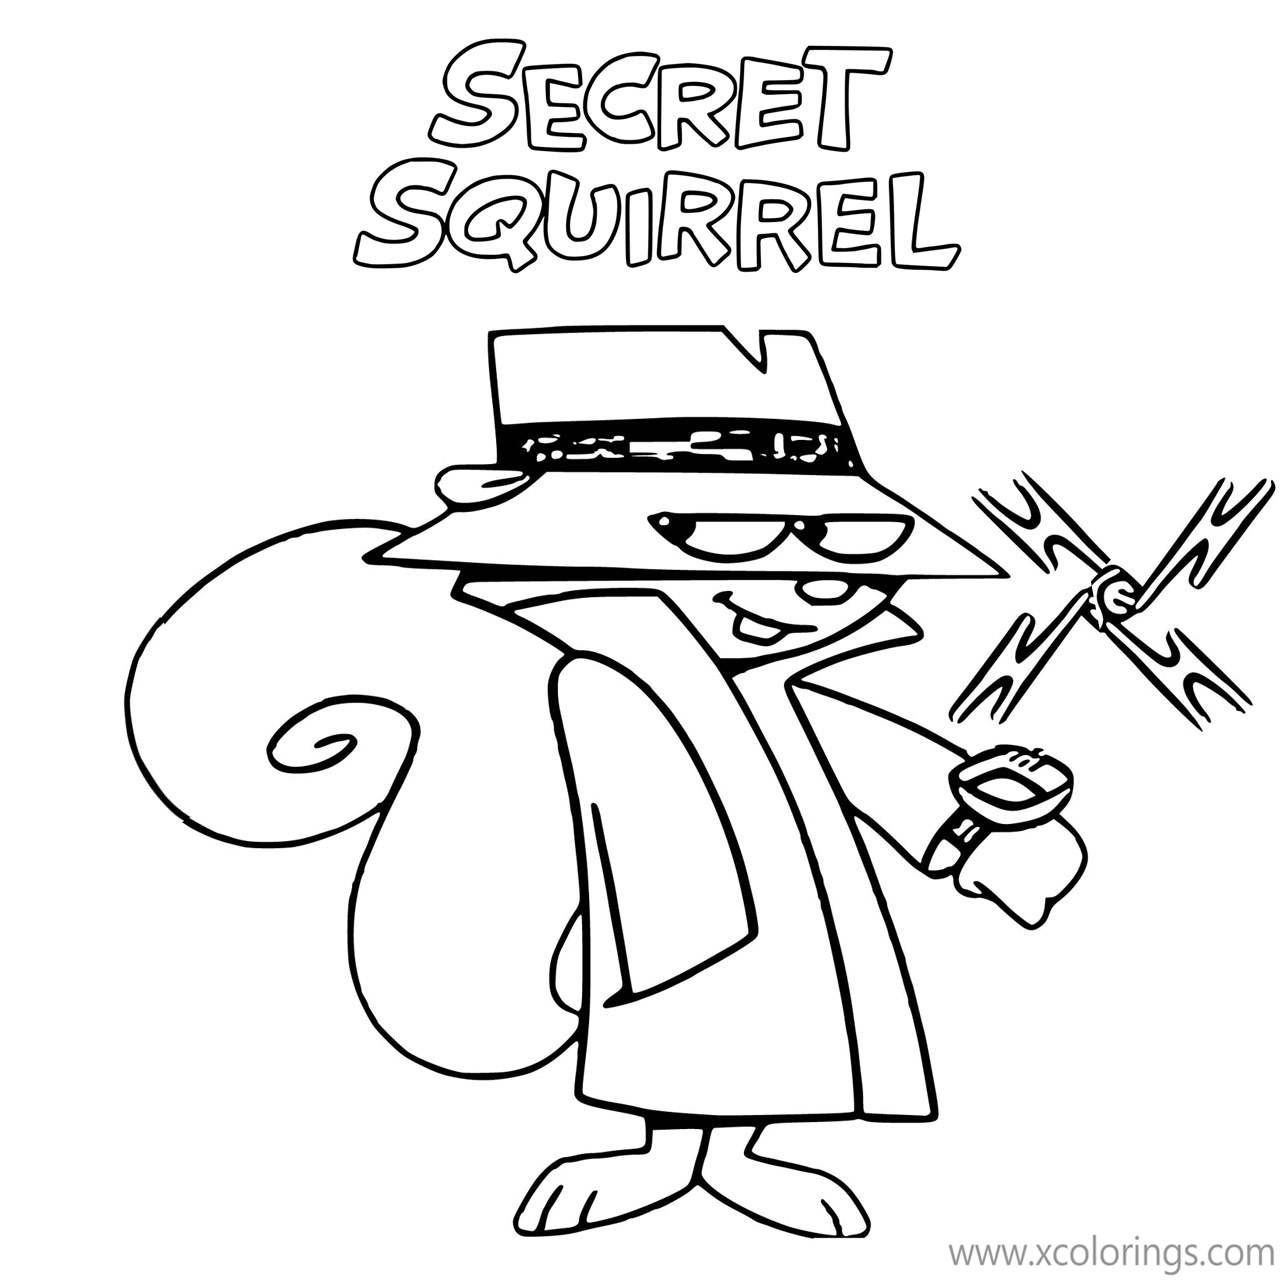 Free Secret Squirrel Coloring Page Logo printable